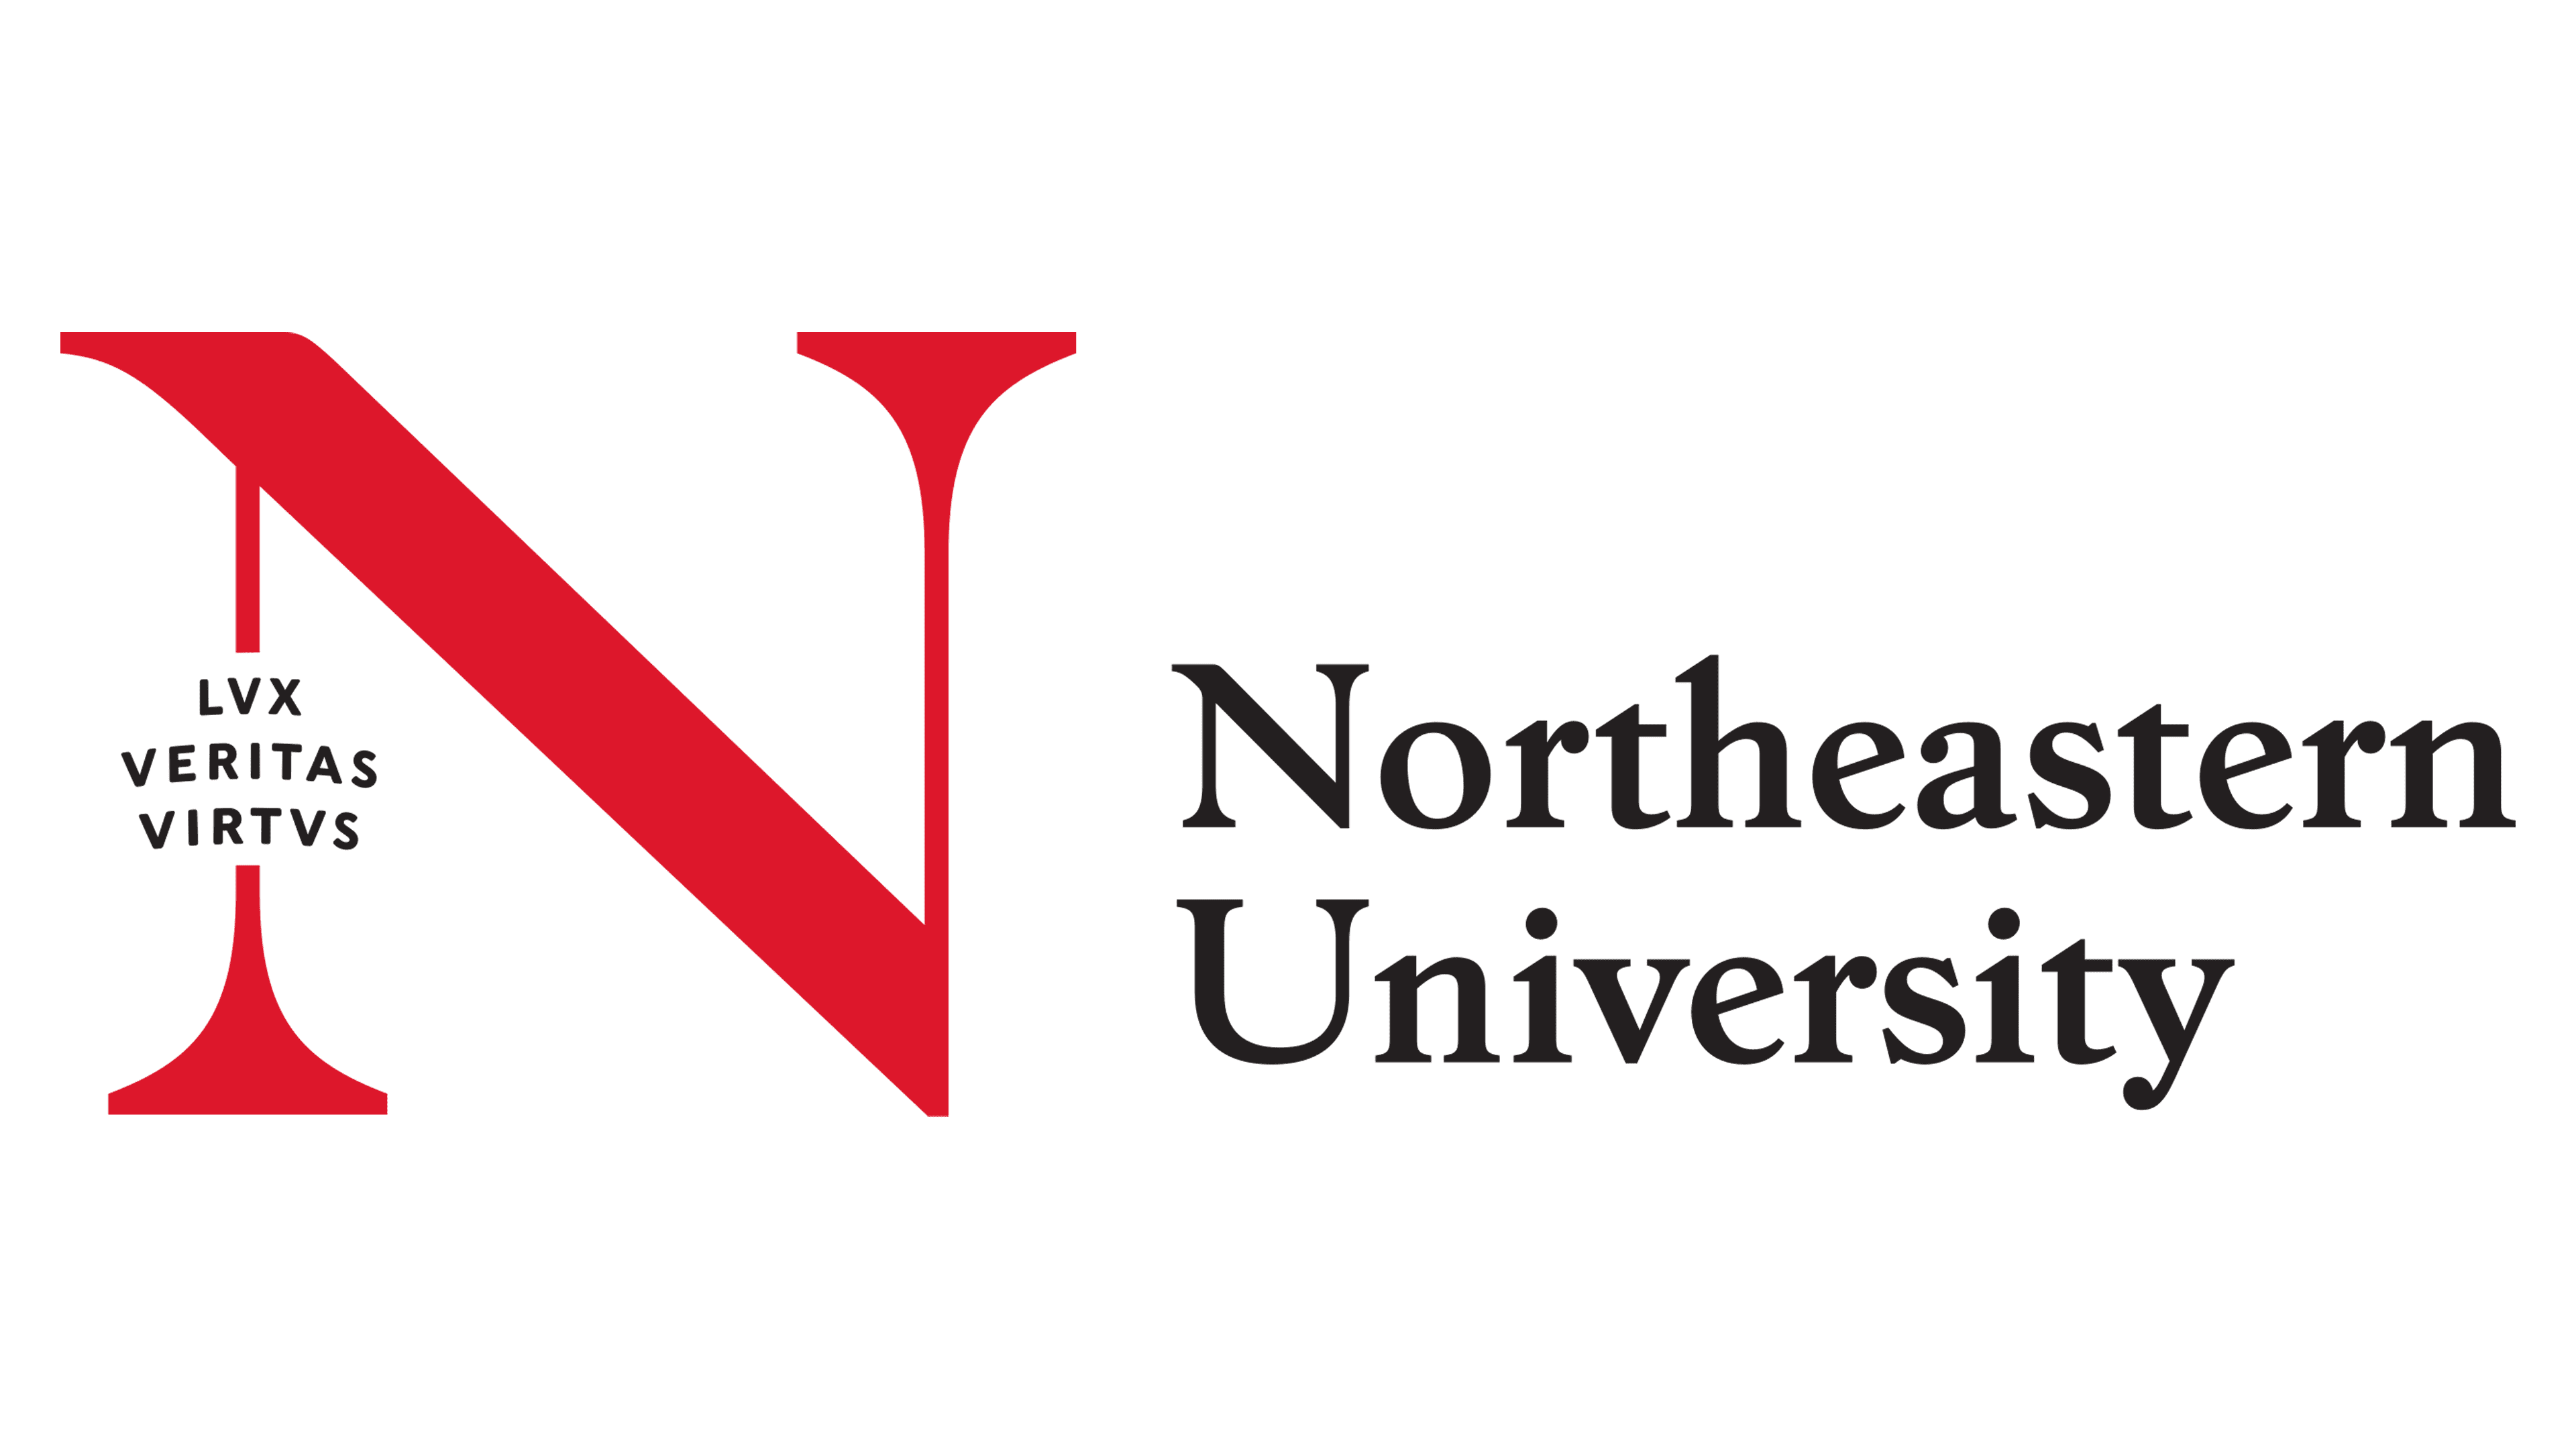 Northeastern-University-Logo